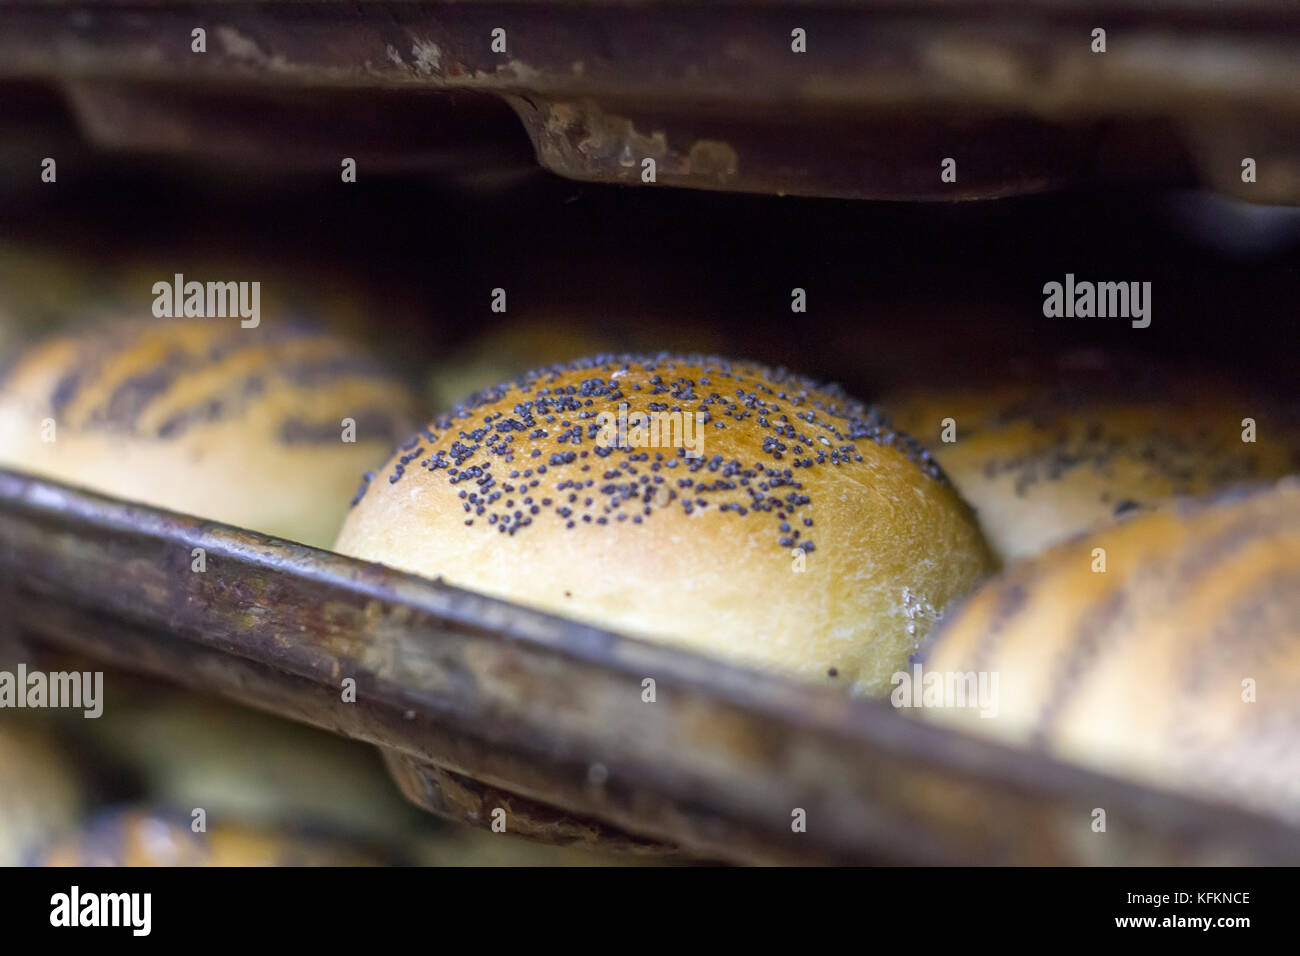 https://c8.alamy.com/comp/KFKNCE/many-ready-made-fresh-bread-in-a-bakery-oven-in-a-bakery-bread-making-KFKNCE.jpg